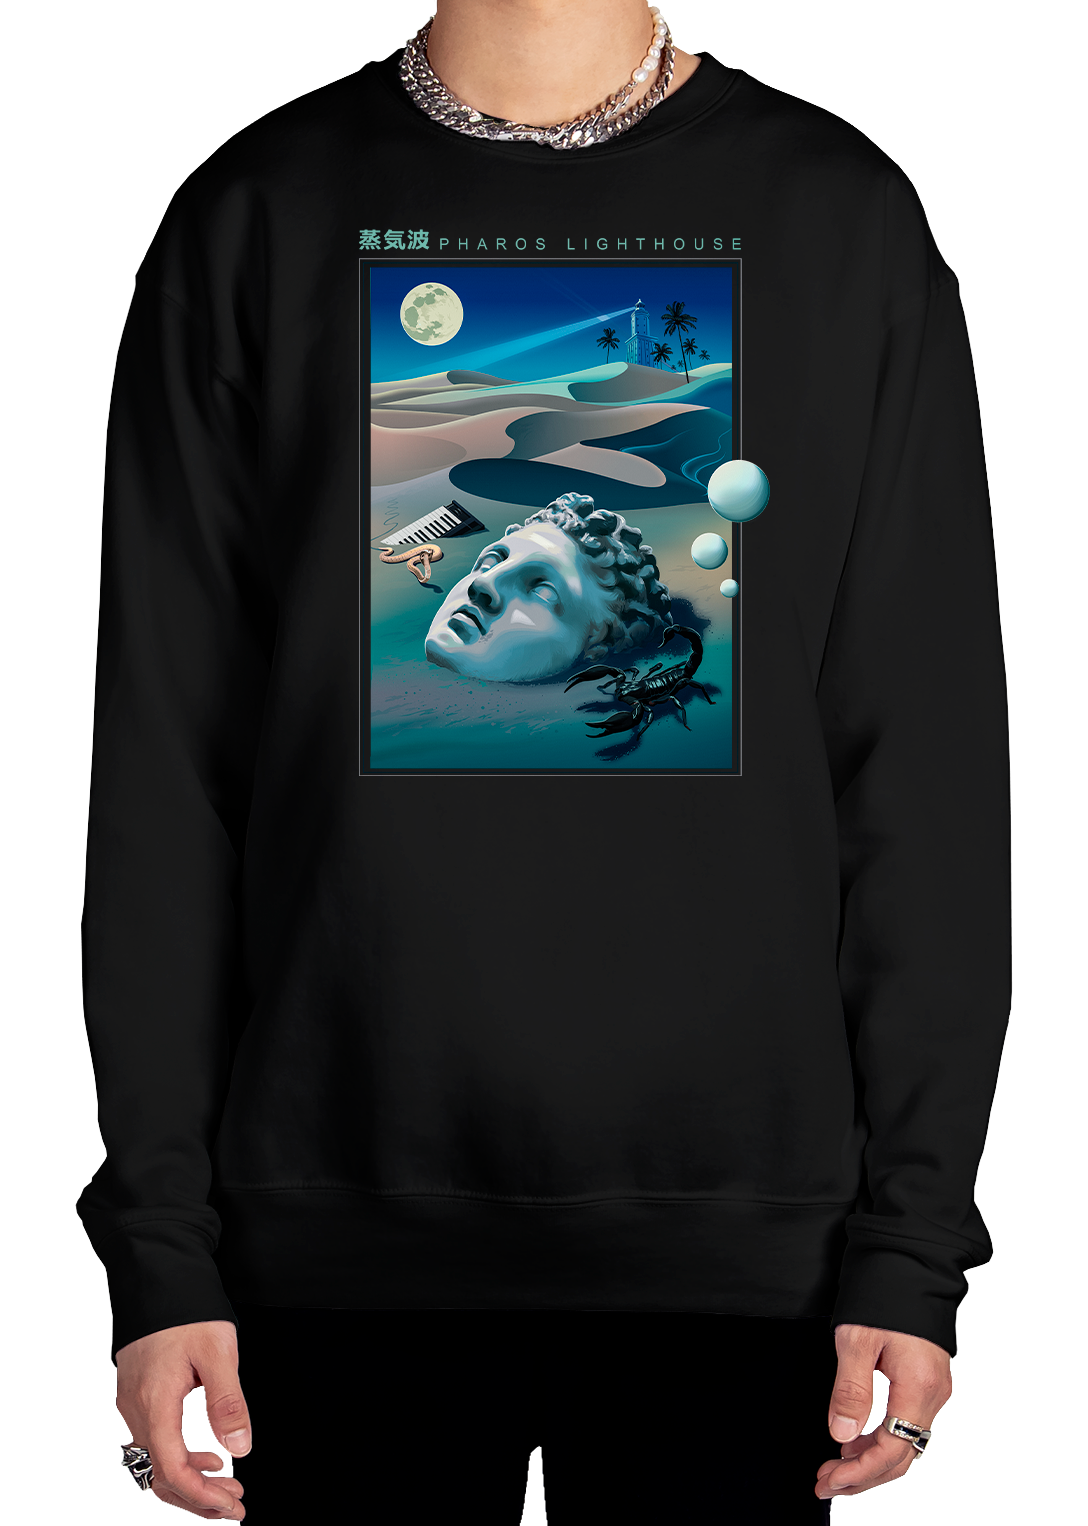 Pharos Lighthouse Sweatshirt Graphic Sweatshirt DTG 